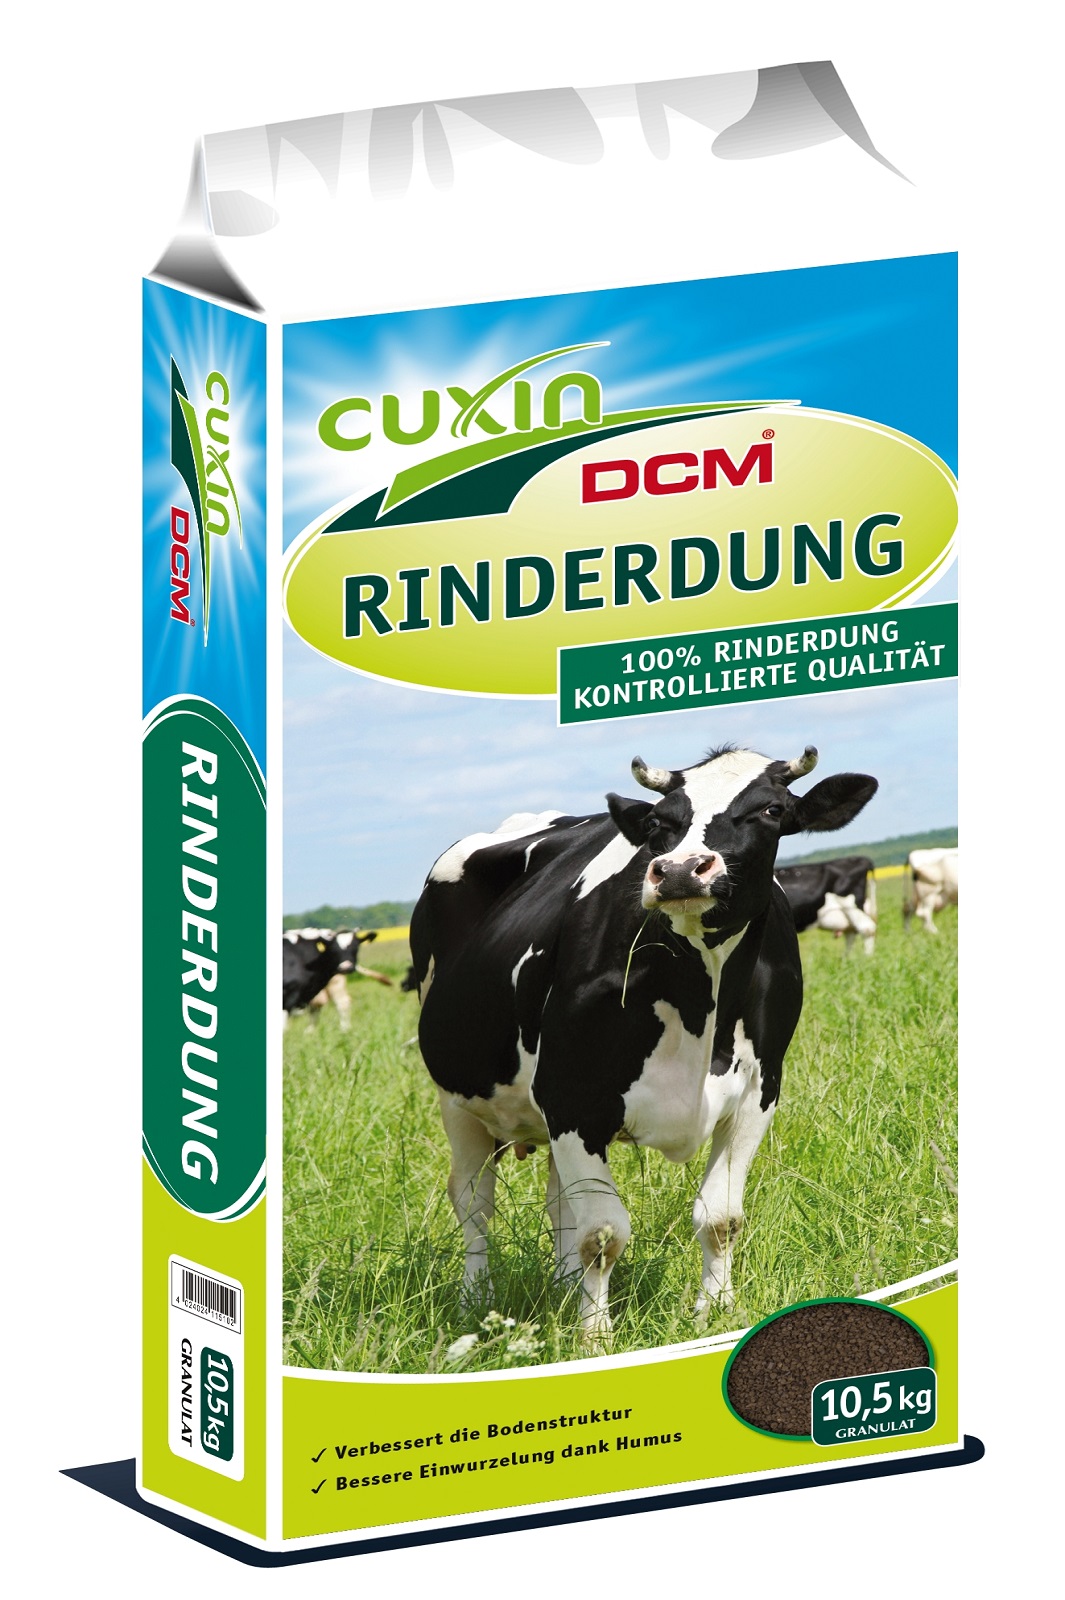 Cuxin DCM Rinderdung Natürlicher Organischer Dünger 20kg